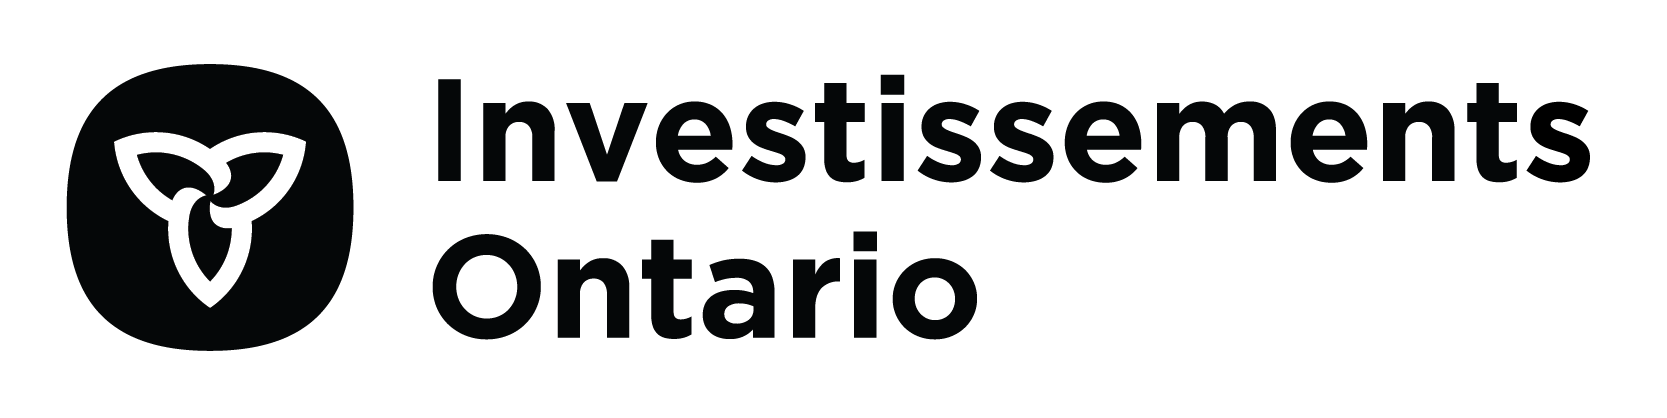 Invest Ontario logo - French, black transparent